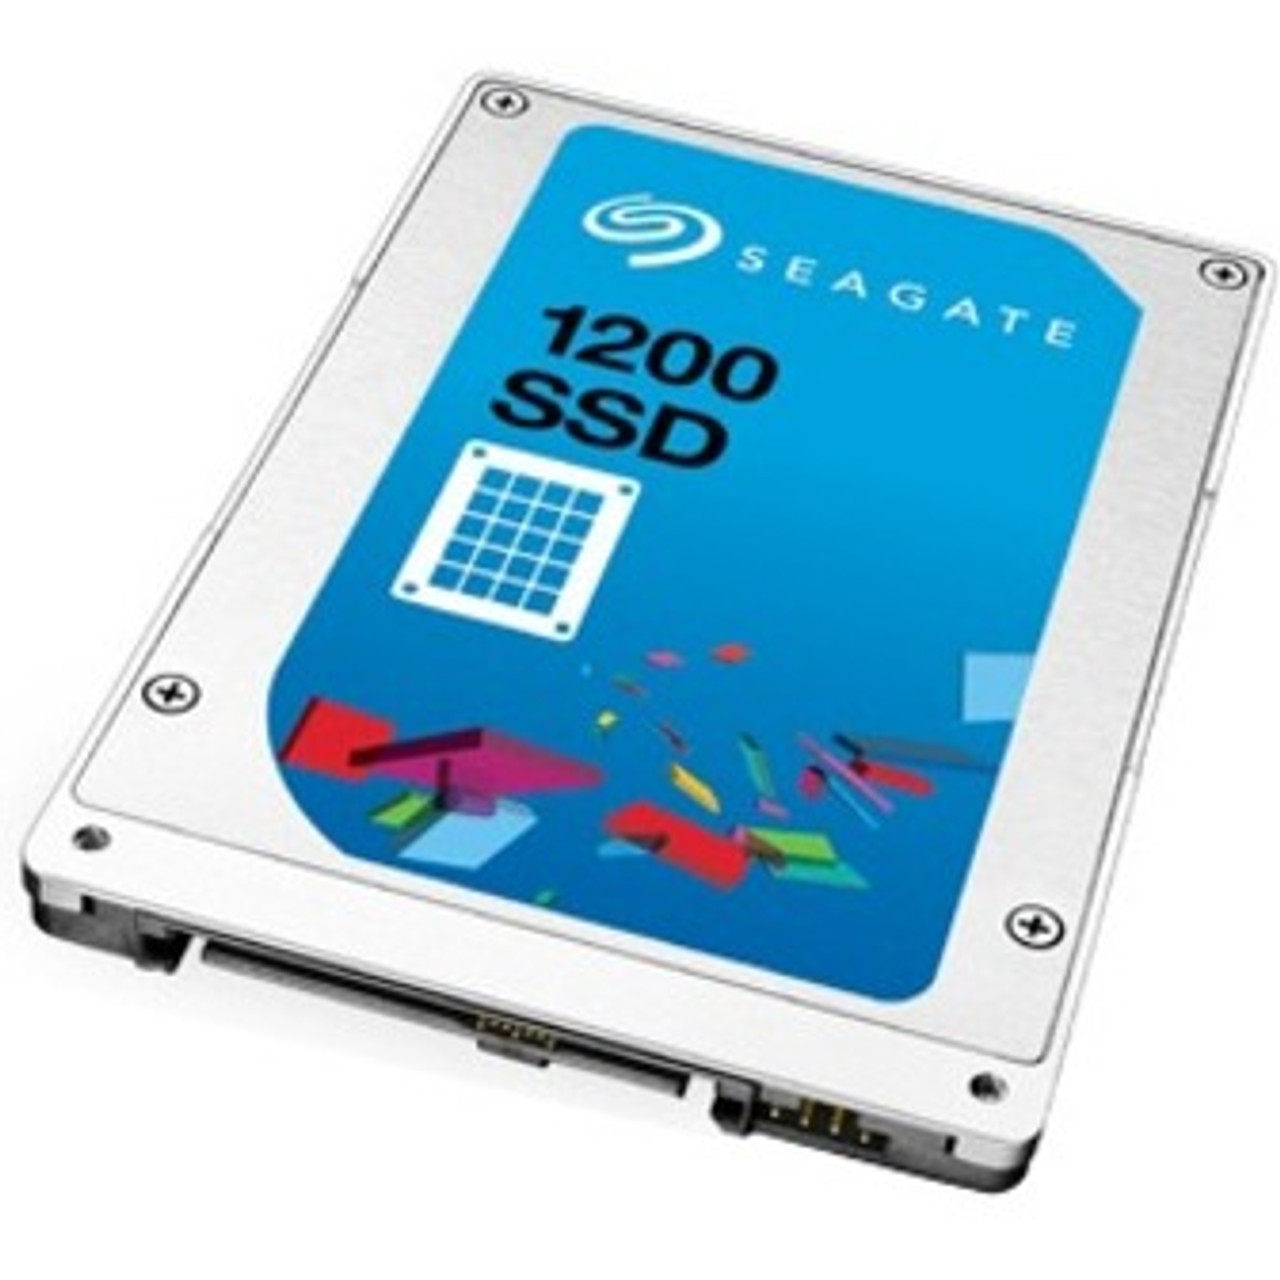 Seagate 1200 ST1000FM0013 1 TB Solid State Drive